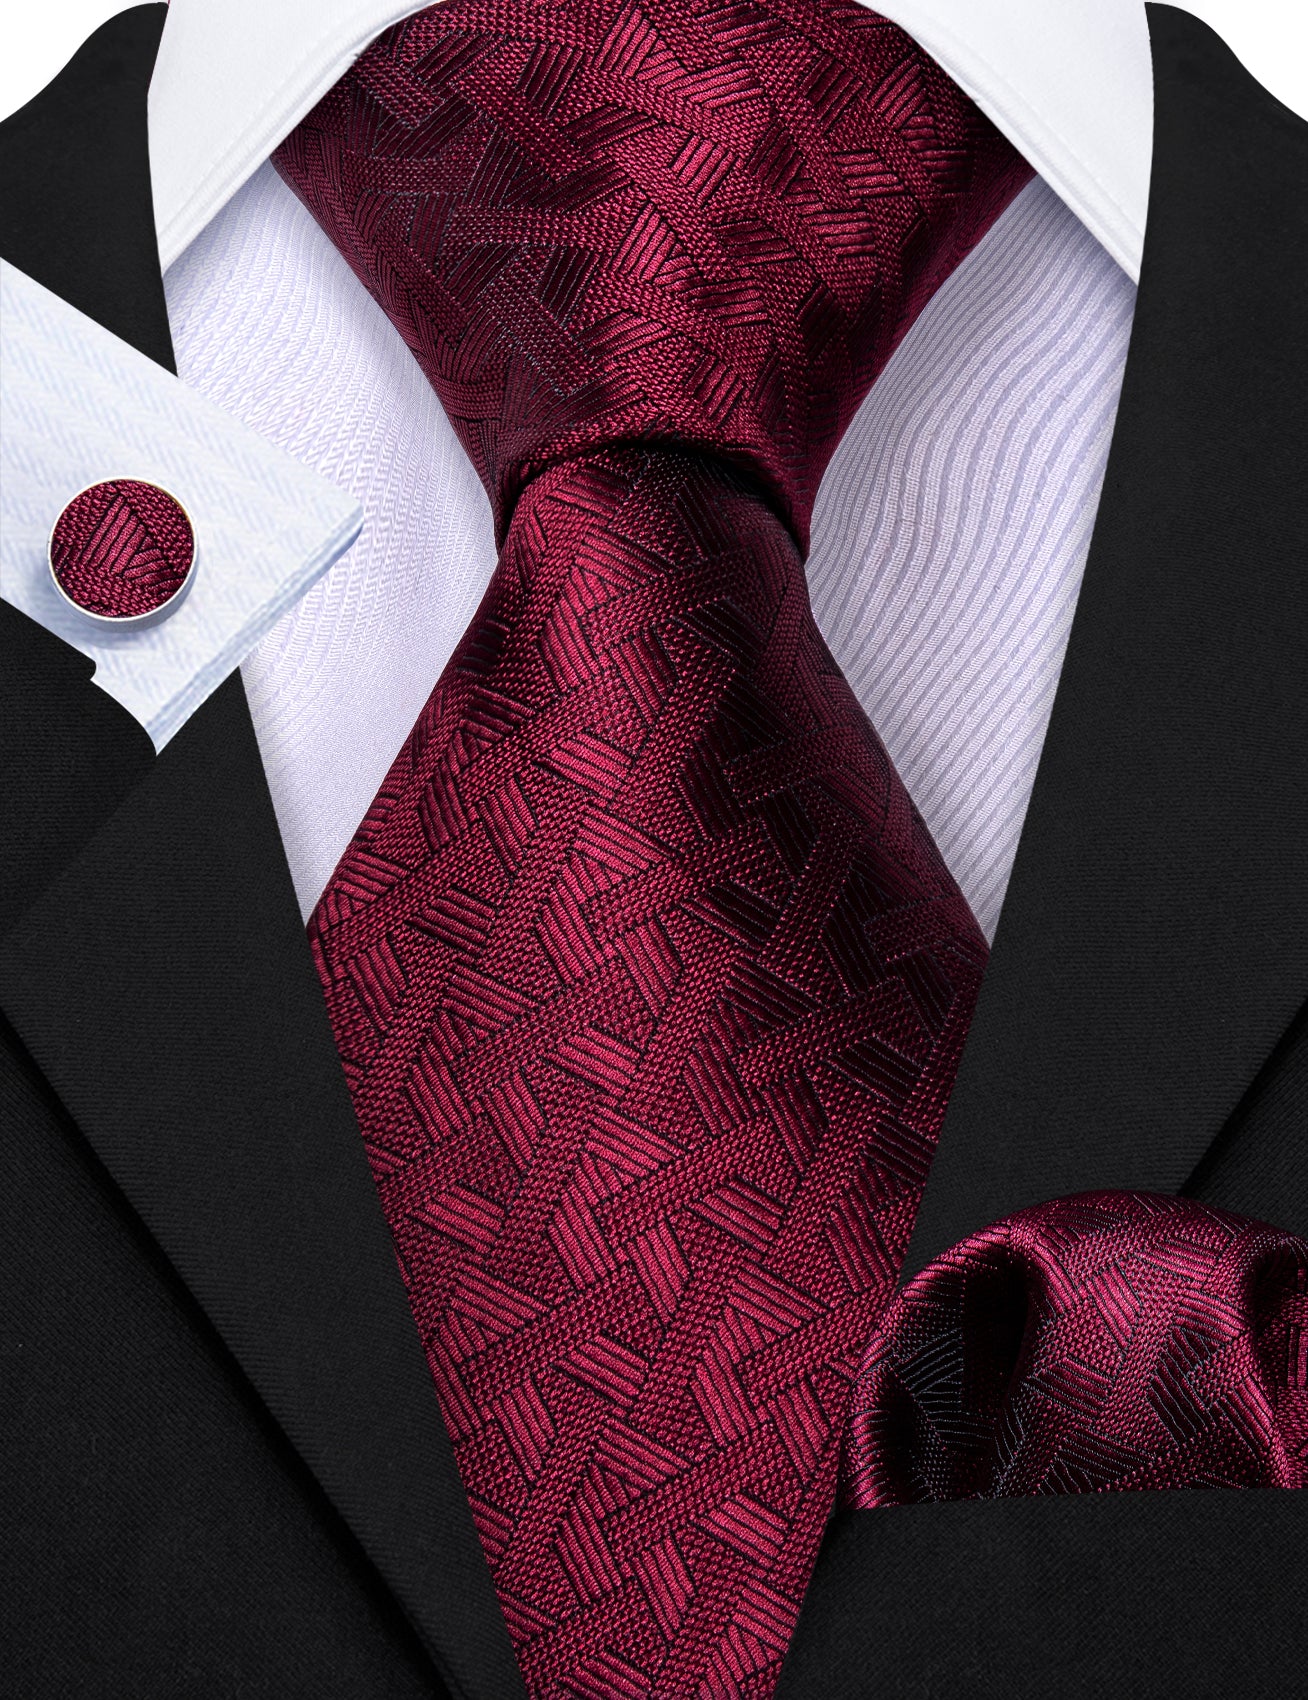 Barry.Wang Red Tie Burgundy Geometry Tie Handkerchief Cufflinks Set